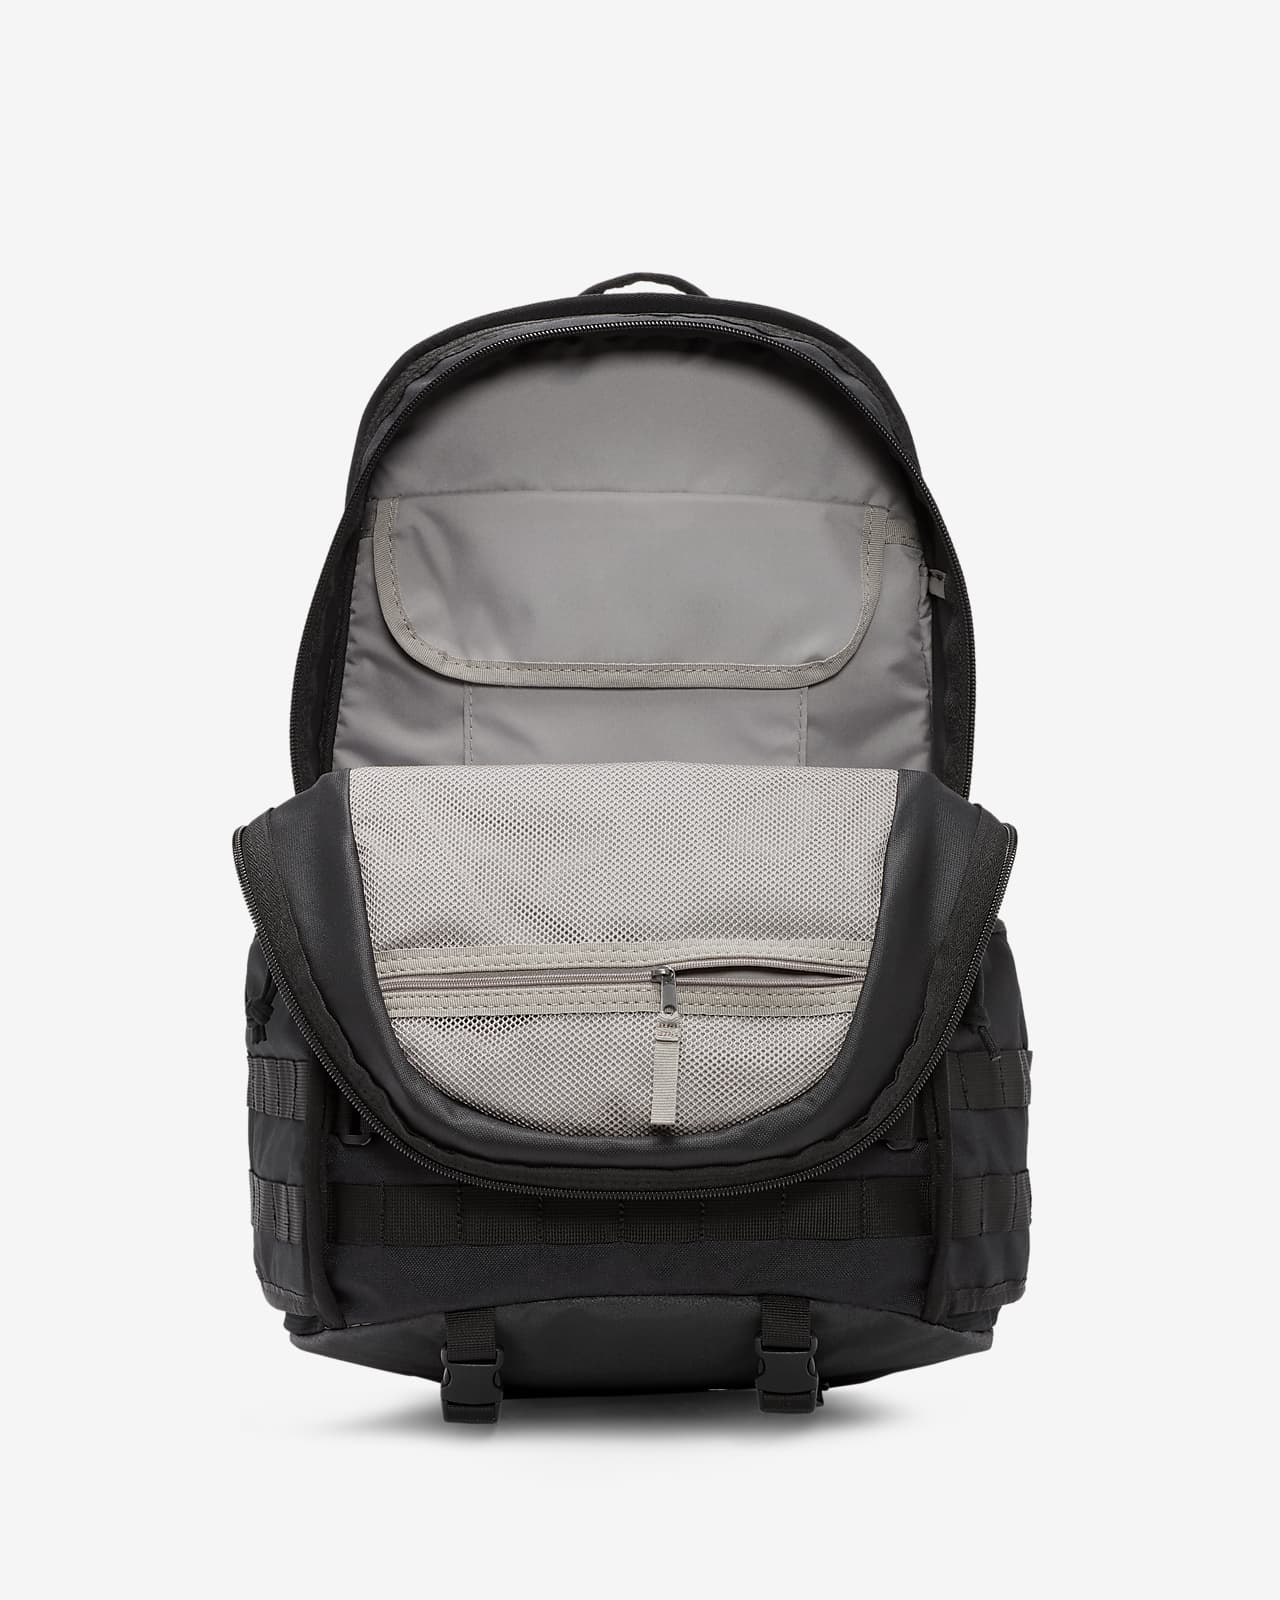 Buy Nike SB RPM Skate Strap Duffle Bag Oversized Camo at Amazon.in